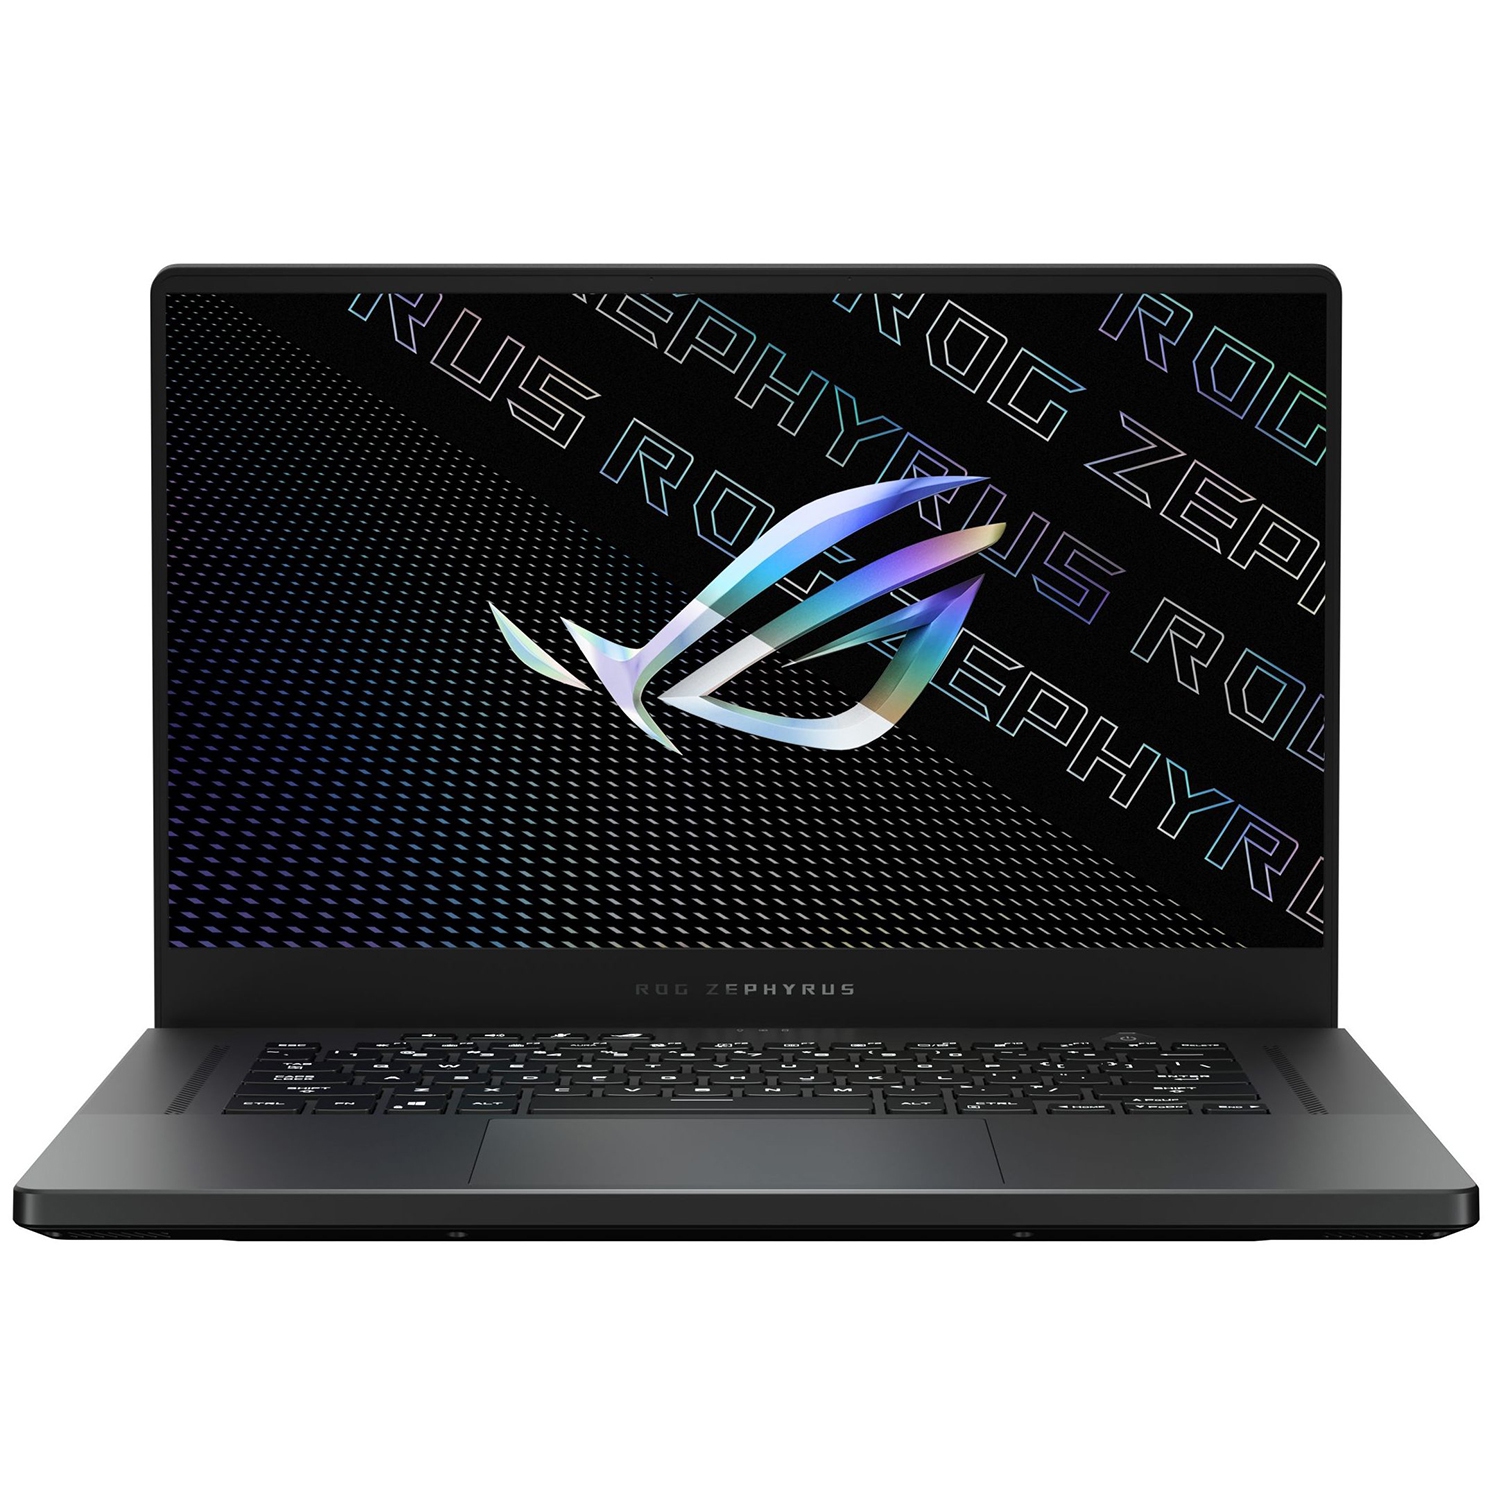 Custom ASUS ROG Zephyrus G15 Laptop (AMD Ryzen 9 5900HS, 24GB RAM, 1TB PCIe SSD, NVIDIA RTX 3060, Win 10 Home)